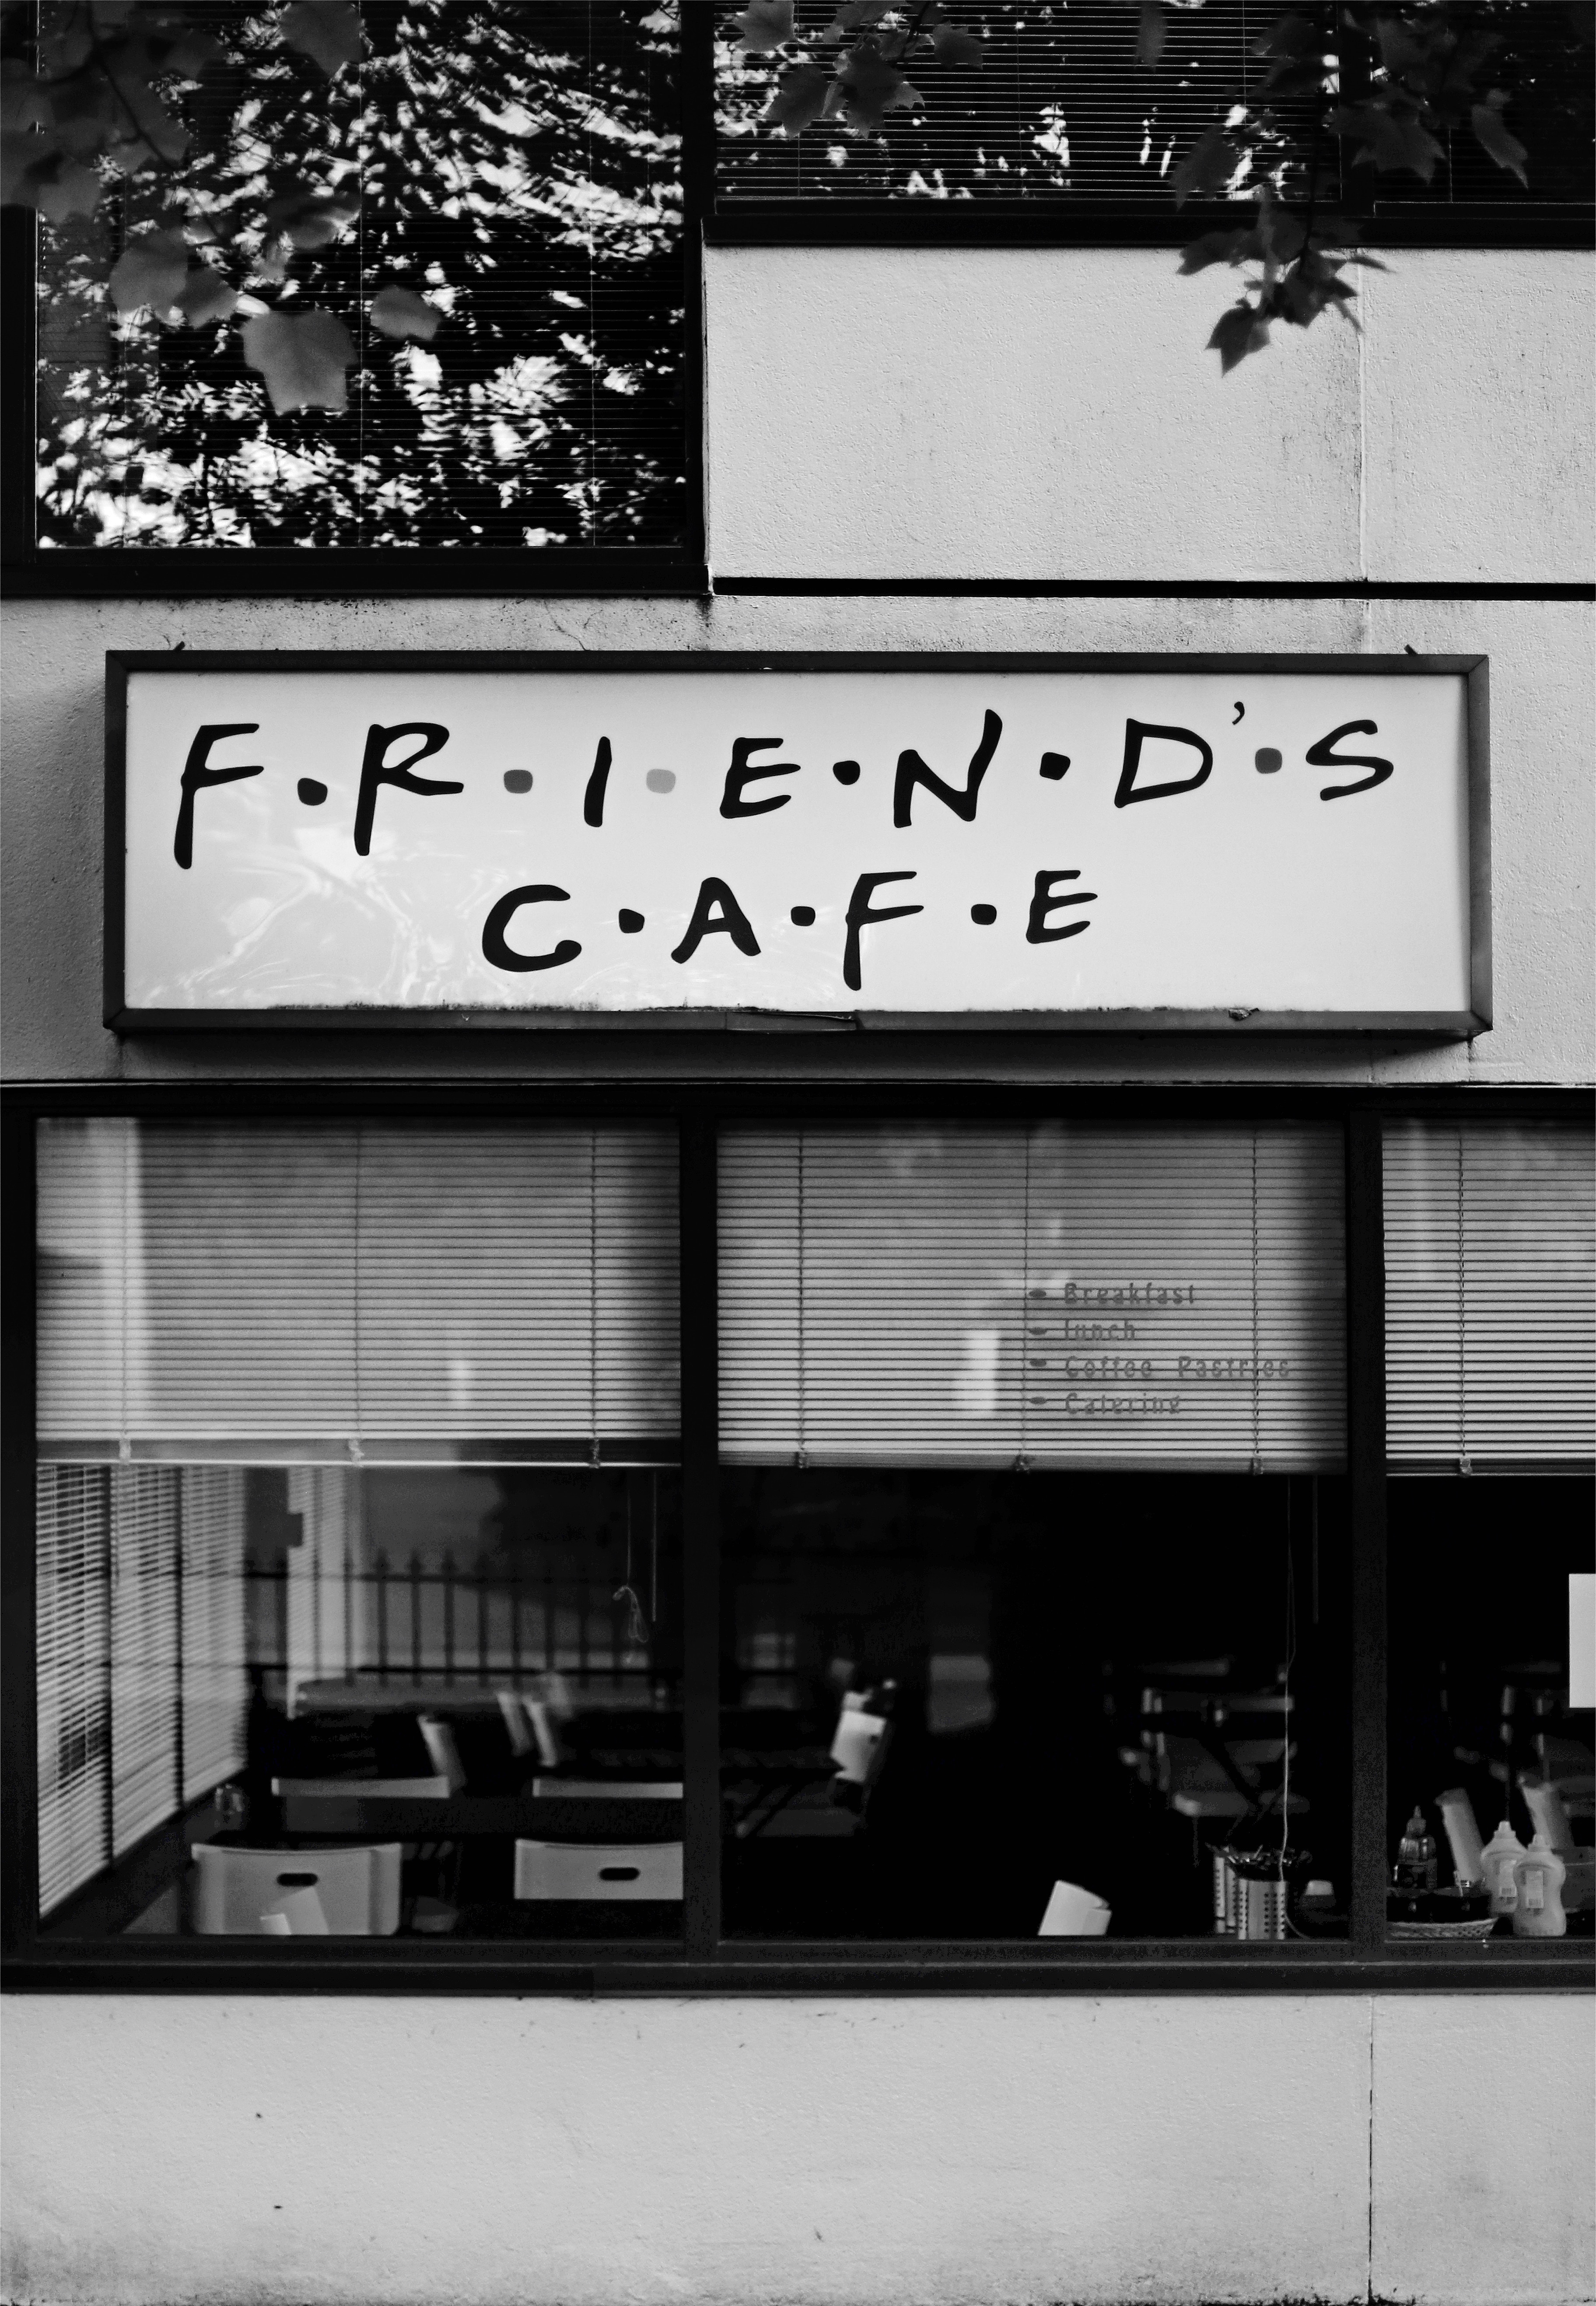 cafe, words, bw, chb, sign, signboard, friends, café cellphone